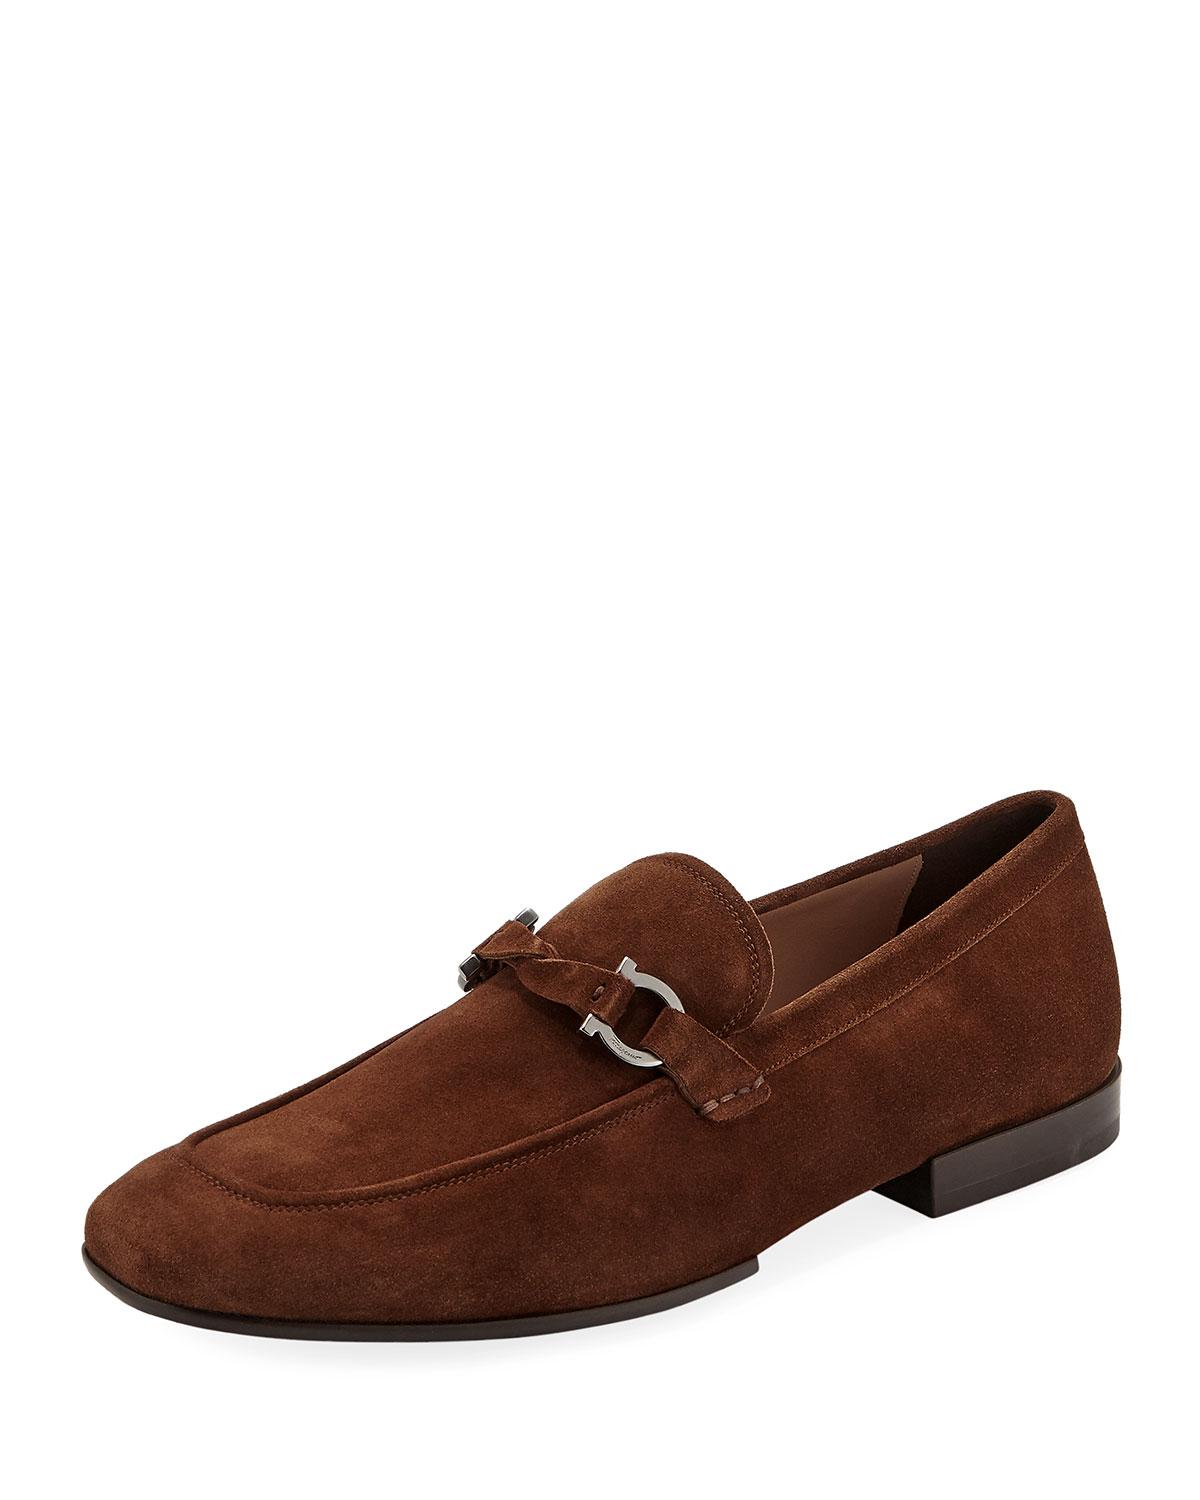 Lyst - Ferragamo Horsebit Loafers in Brown for Men - Save 45%